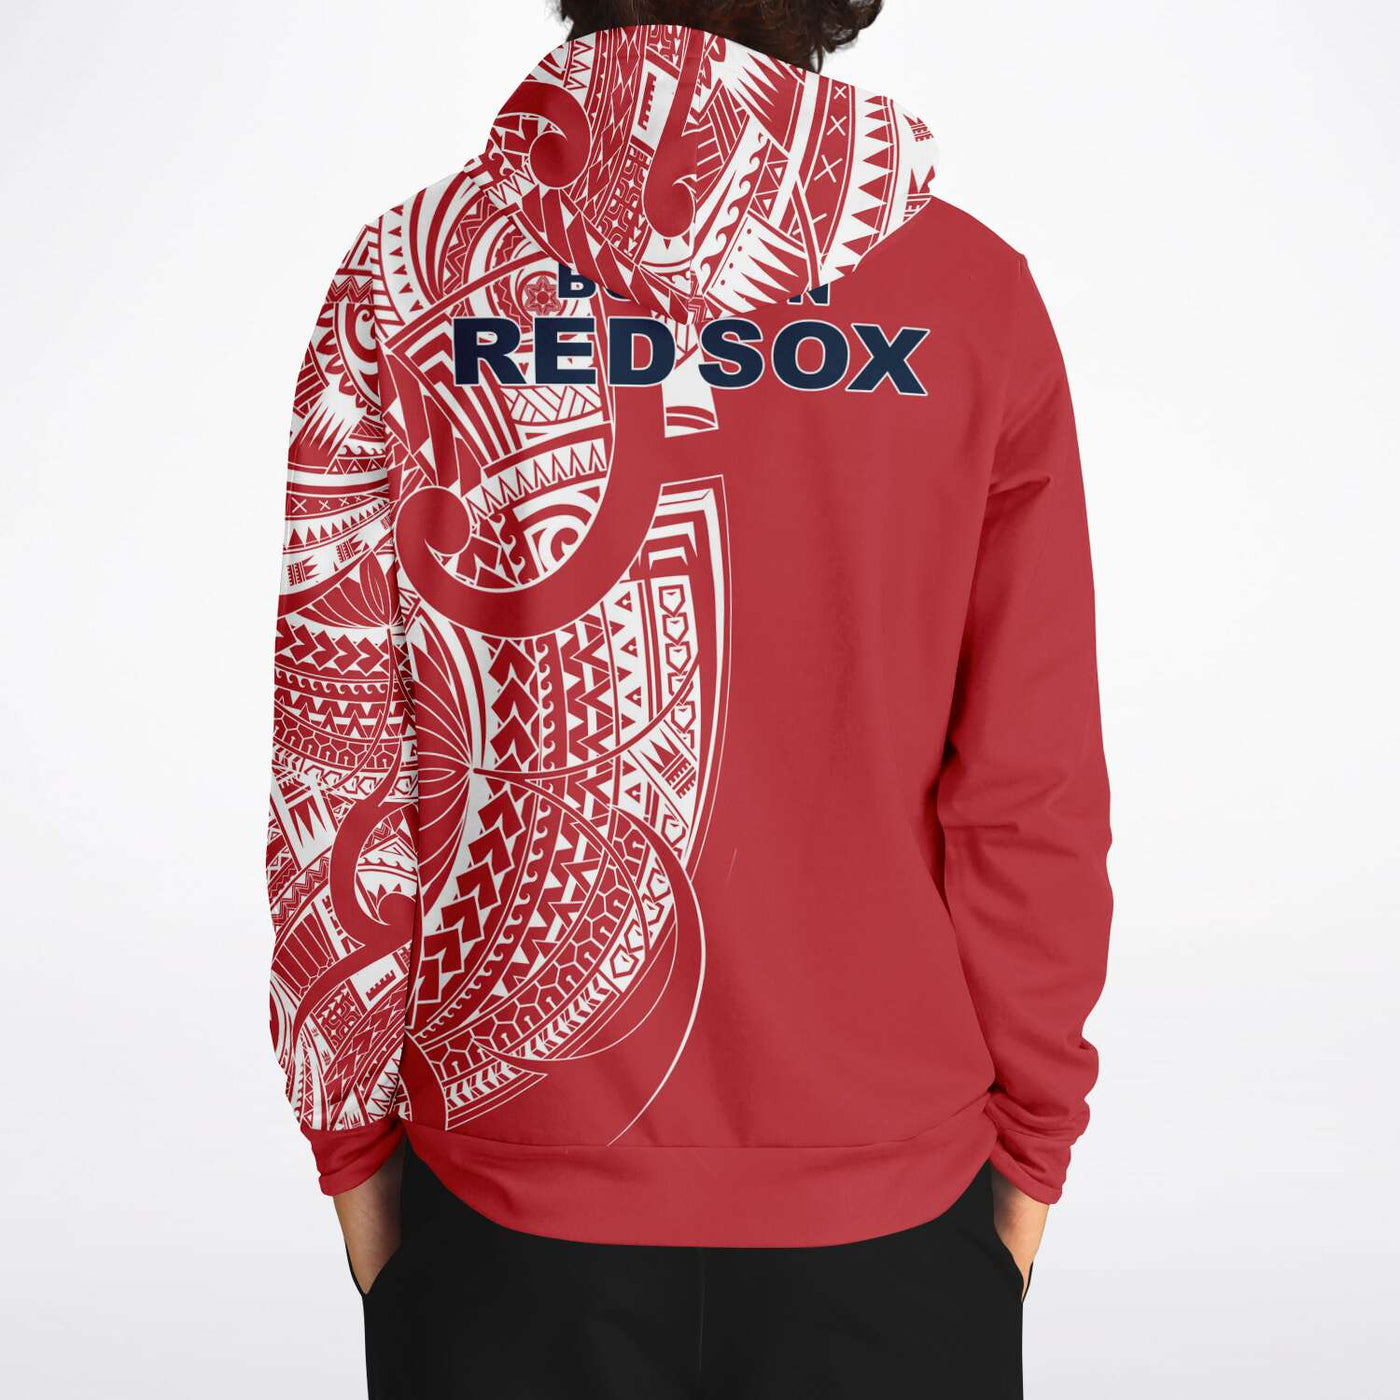 boston red sox sweatshirts  Red sox sweatshirt, Sweatshirts, Mlb red sox